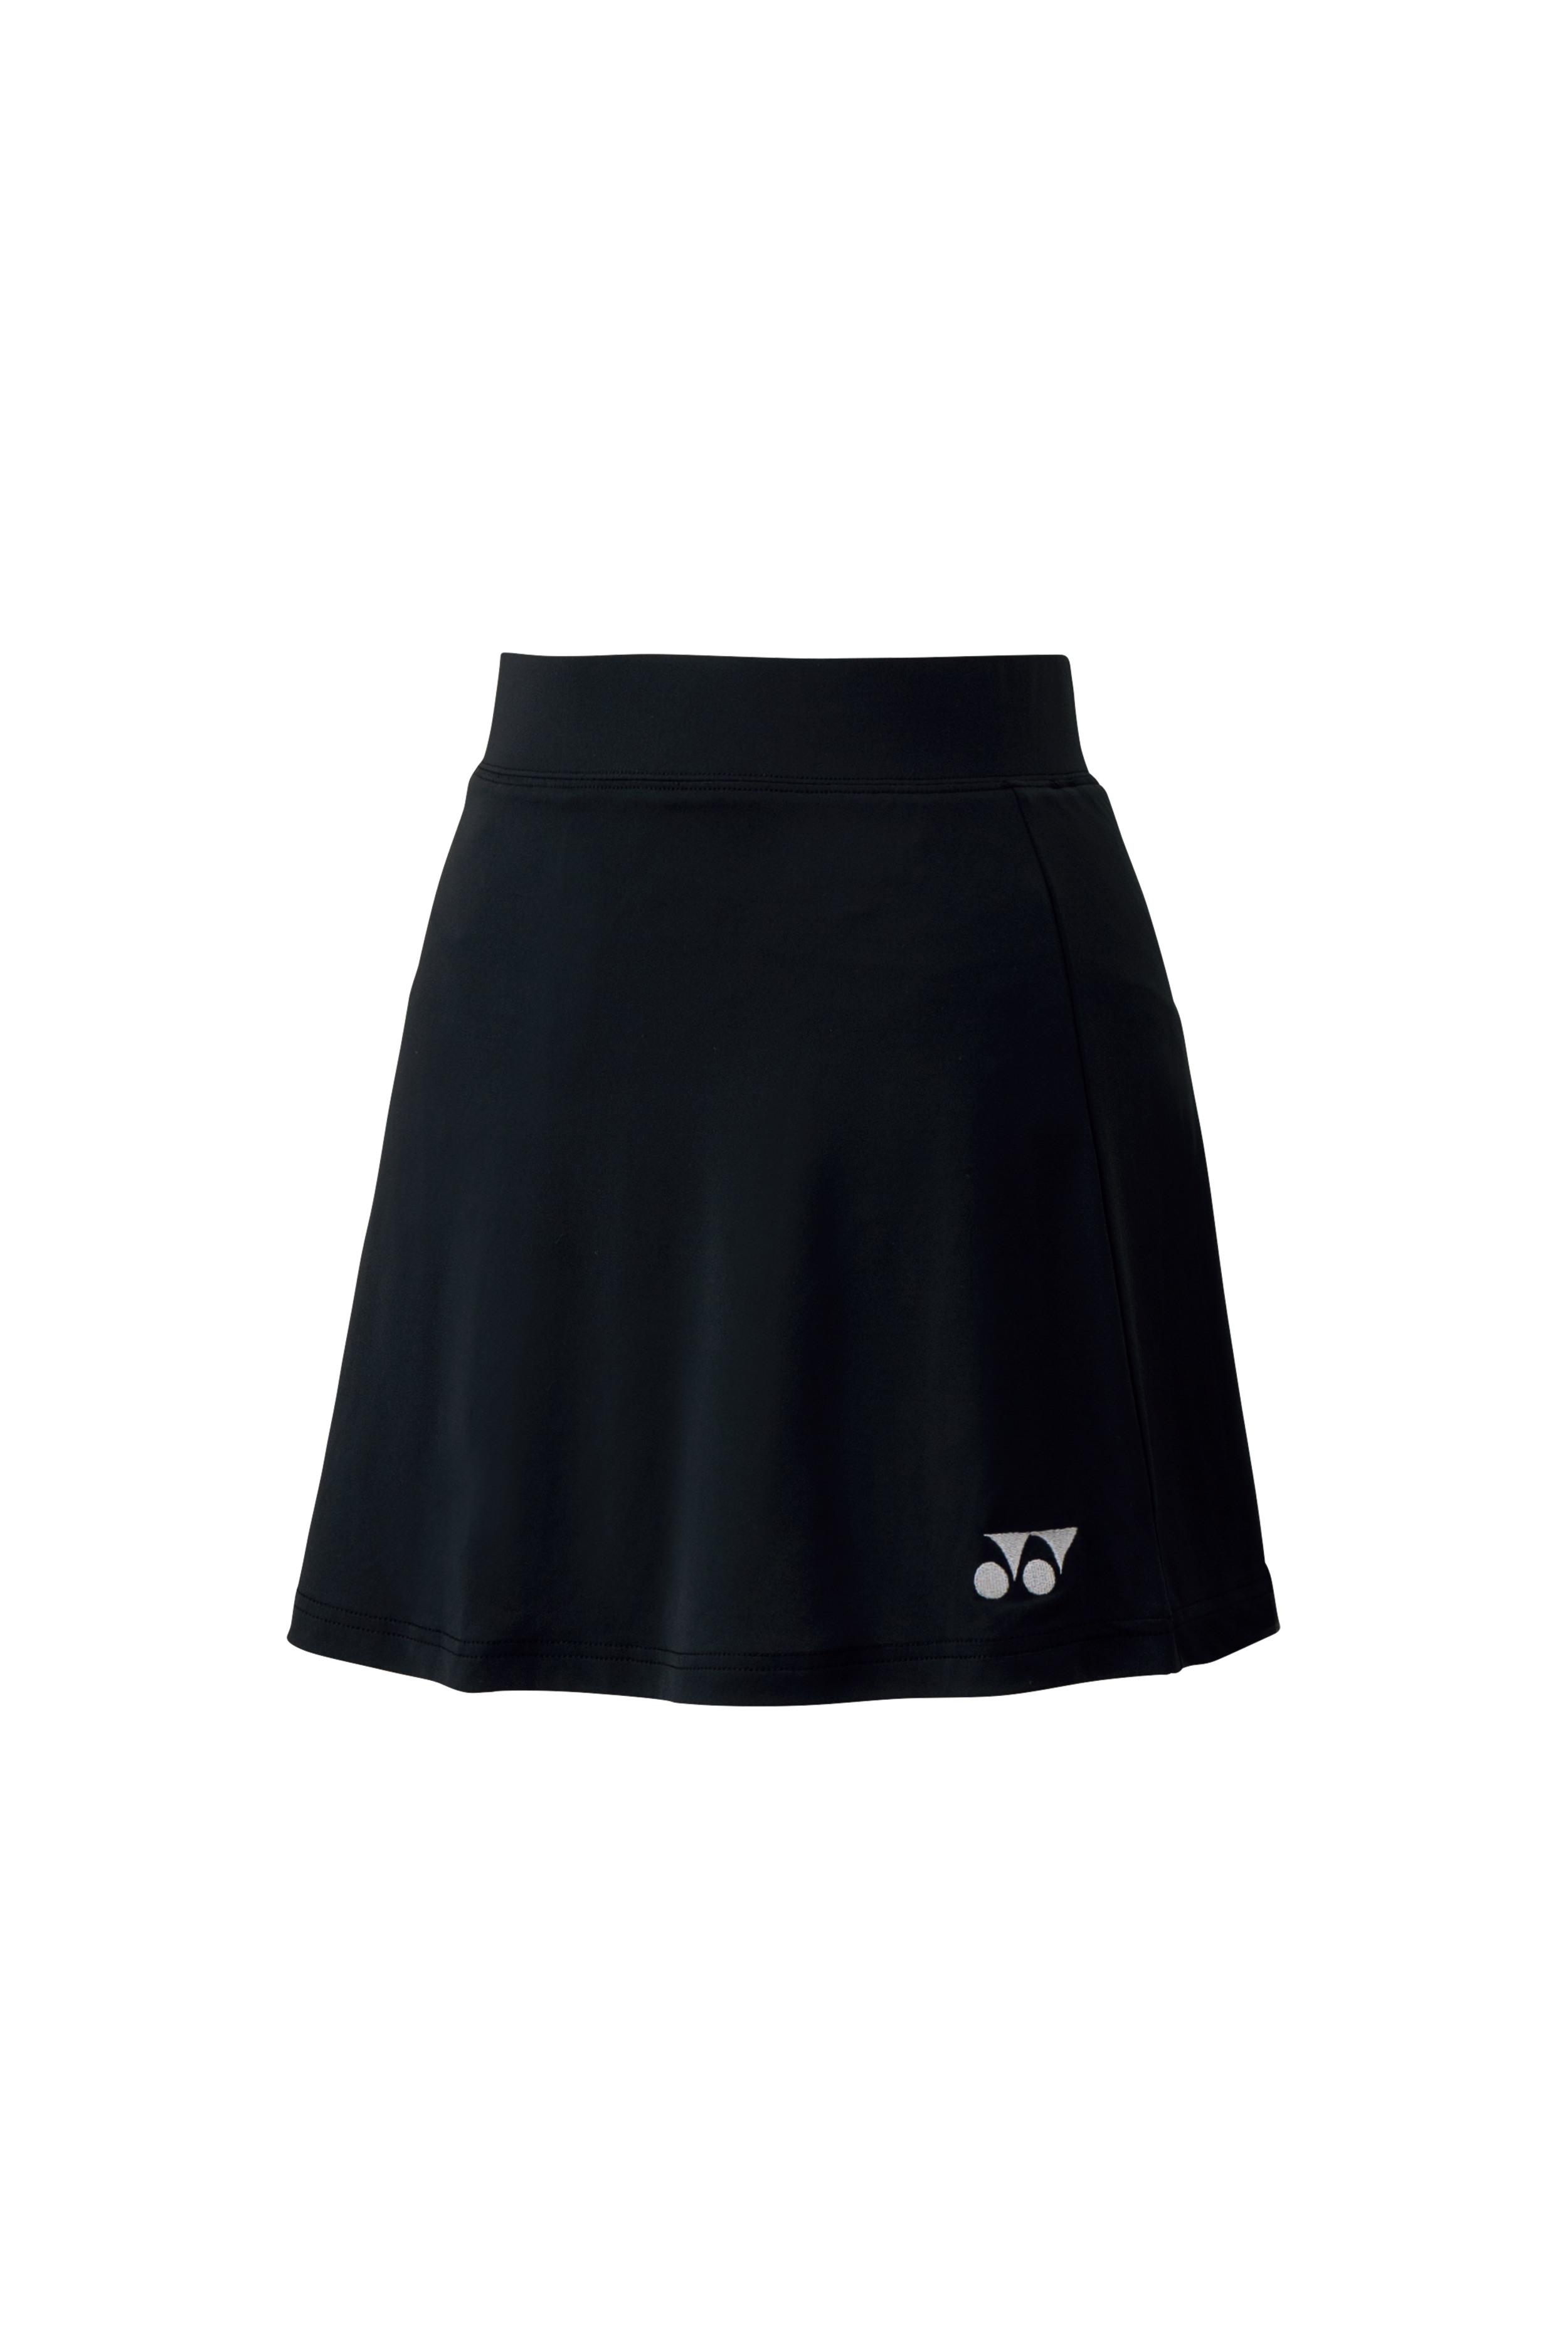 Yonex Women's Badminton Skirt Black Pants Clothing Racket Racquet NWT 26053EXBK 